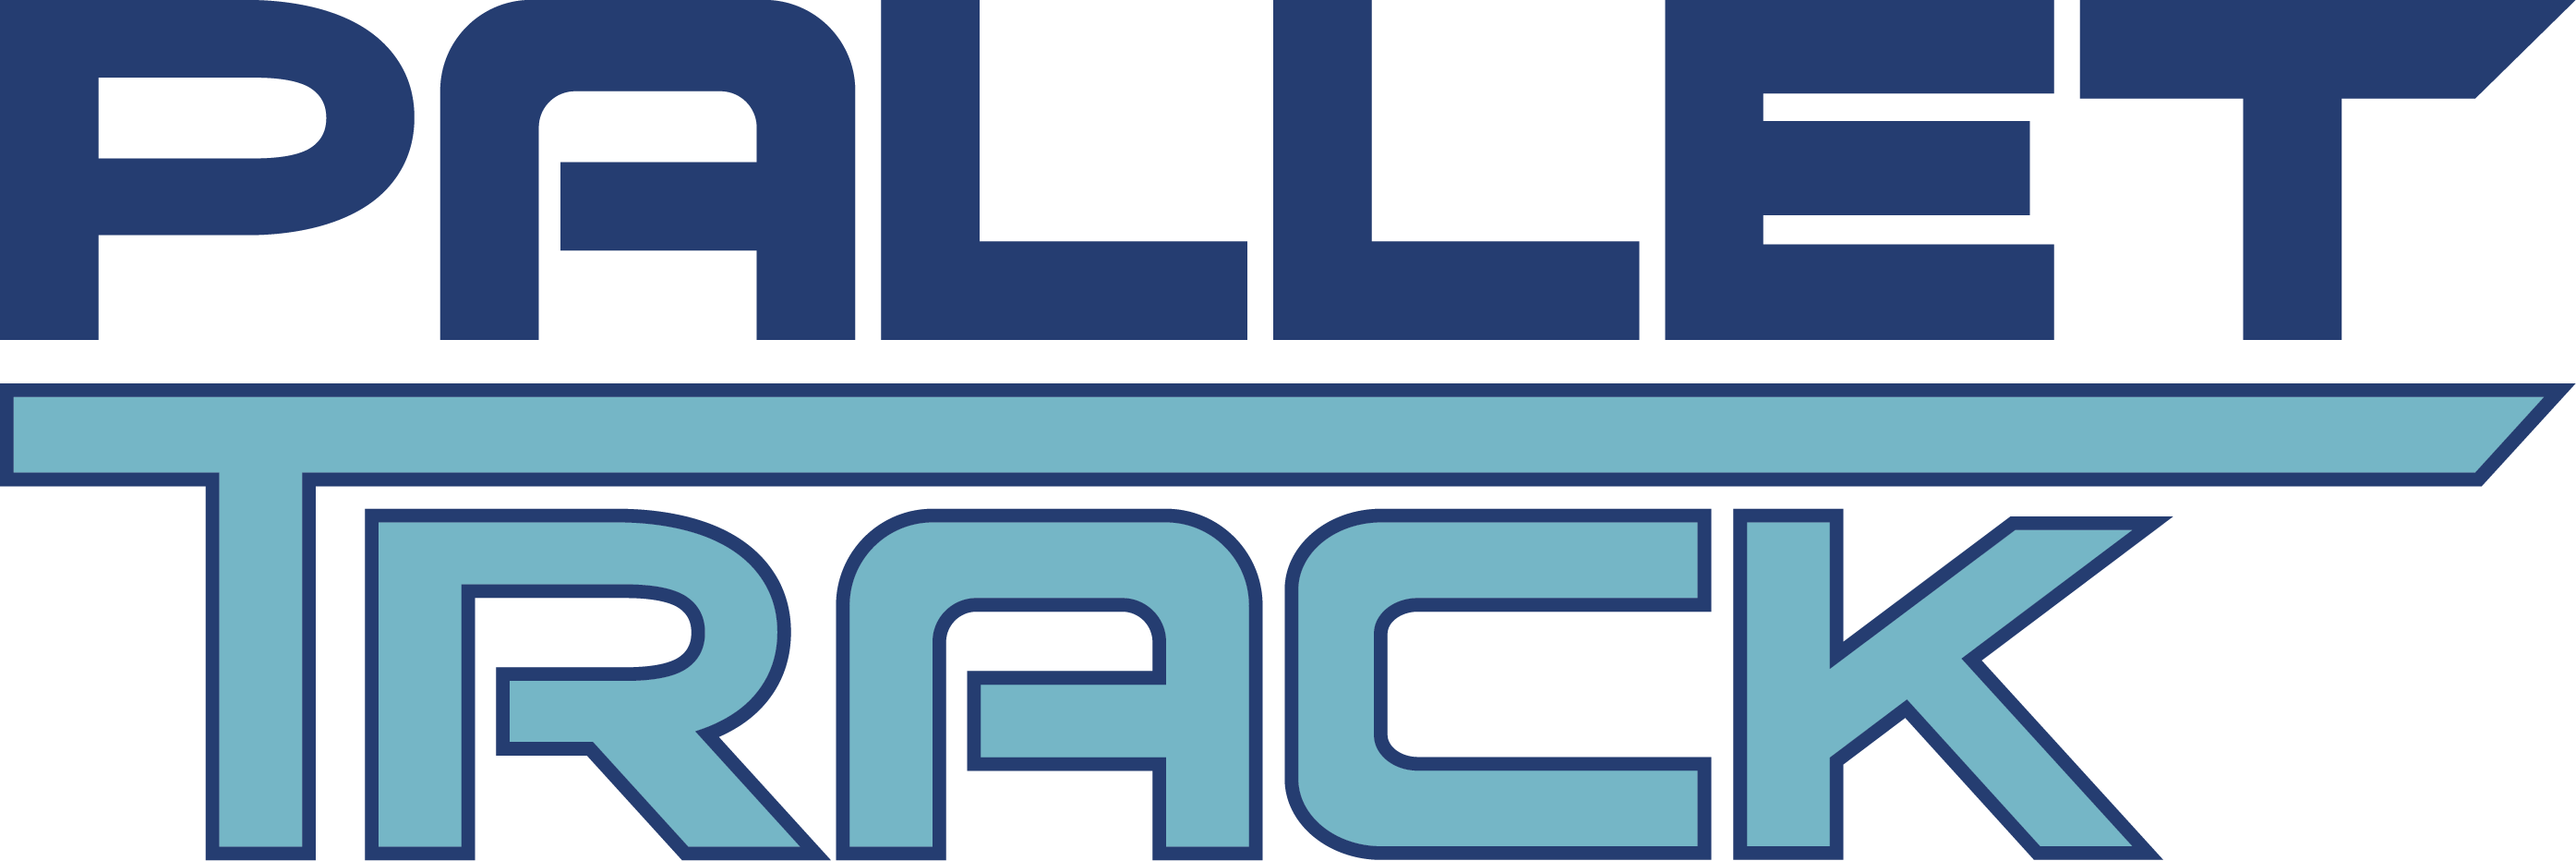 Pallet Track Final Logos full colour